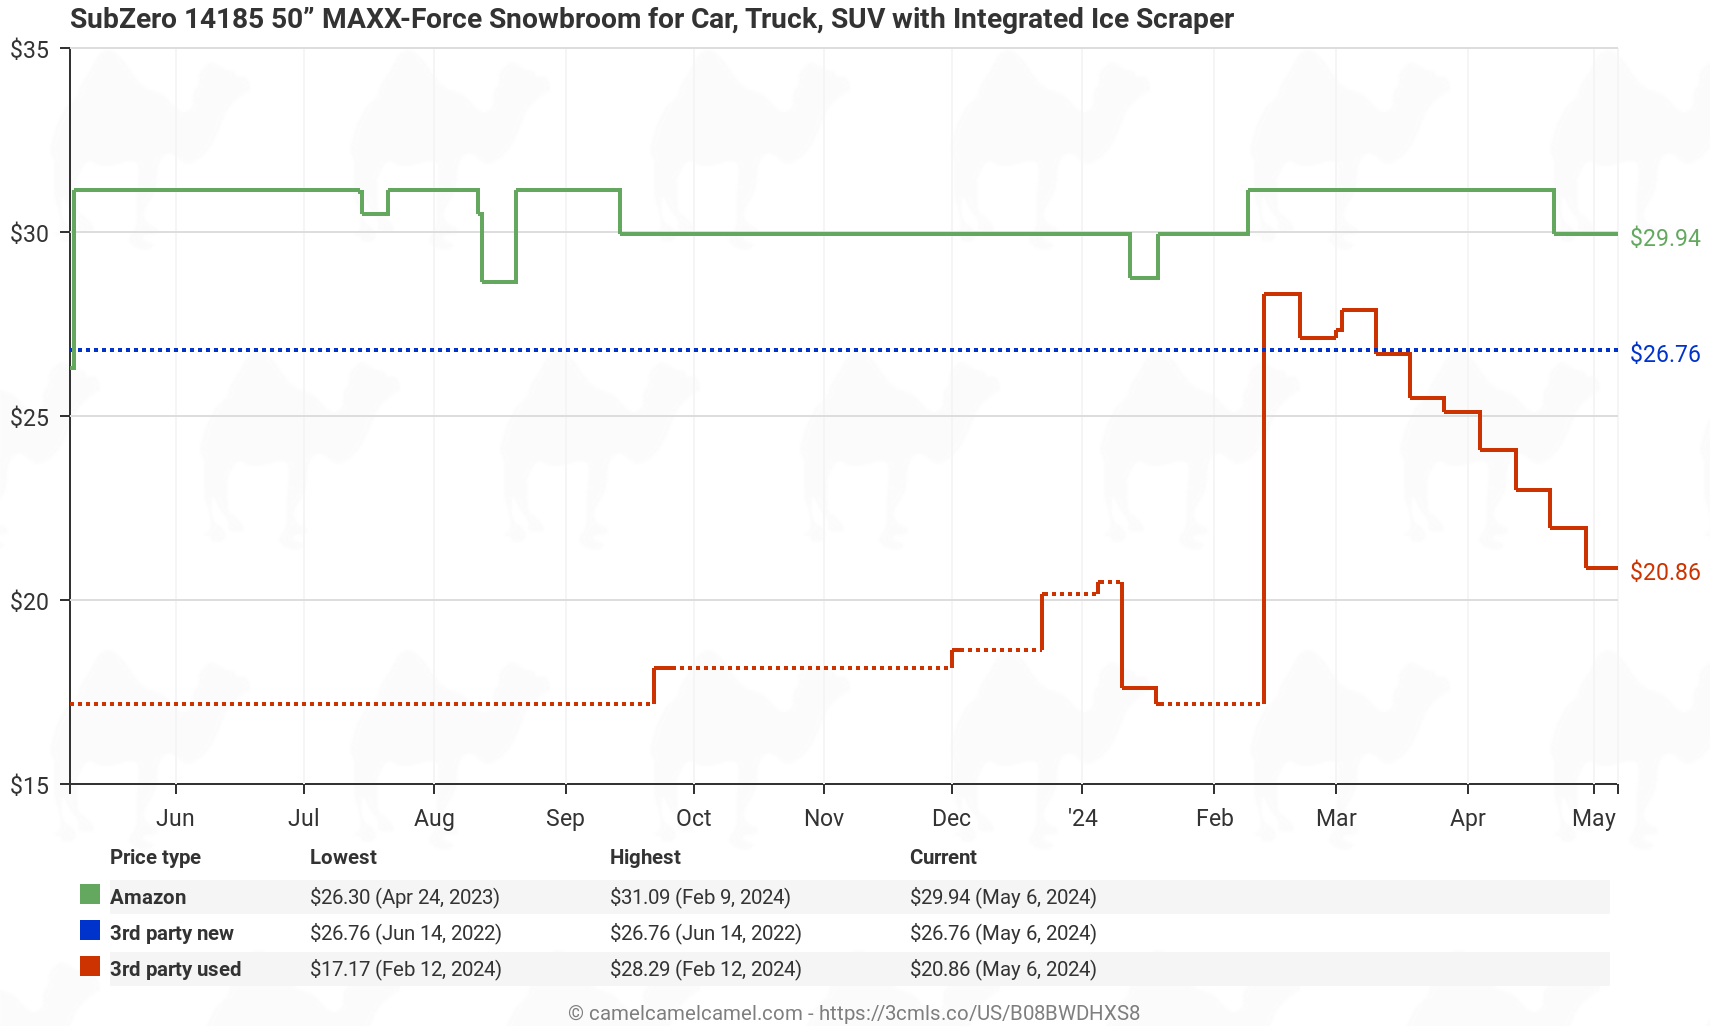 Subzero 14185 50” MAXX-Force Snowbroom - Price History: B08BWDHXS8